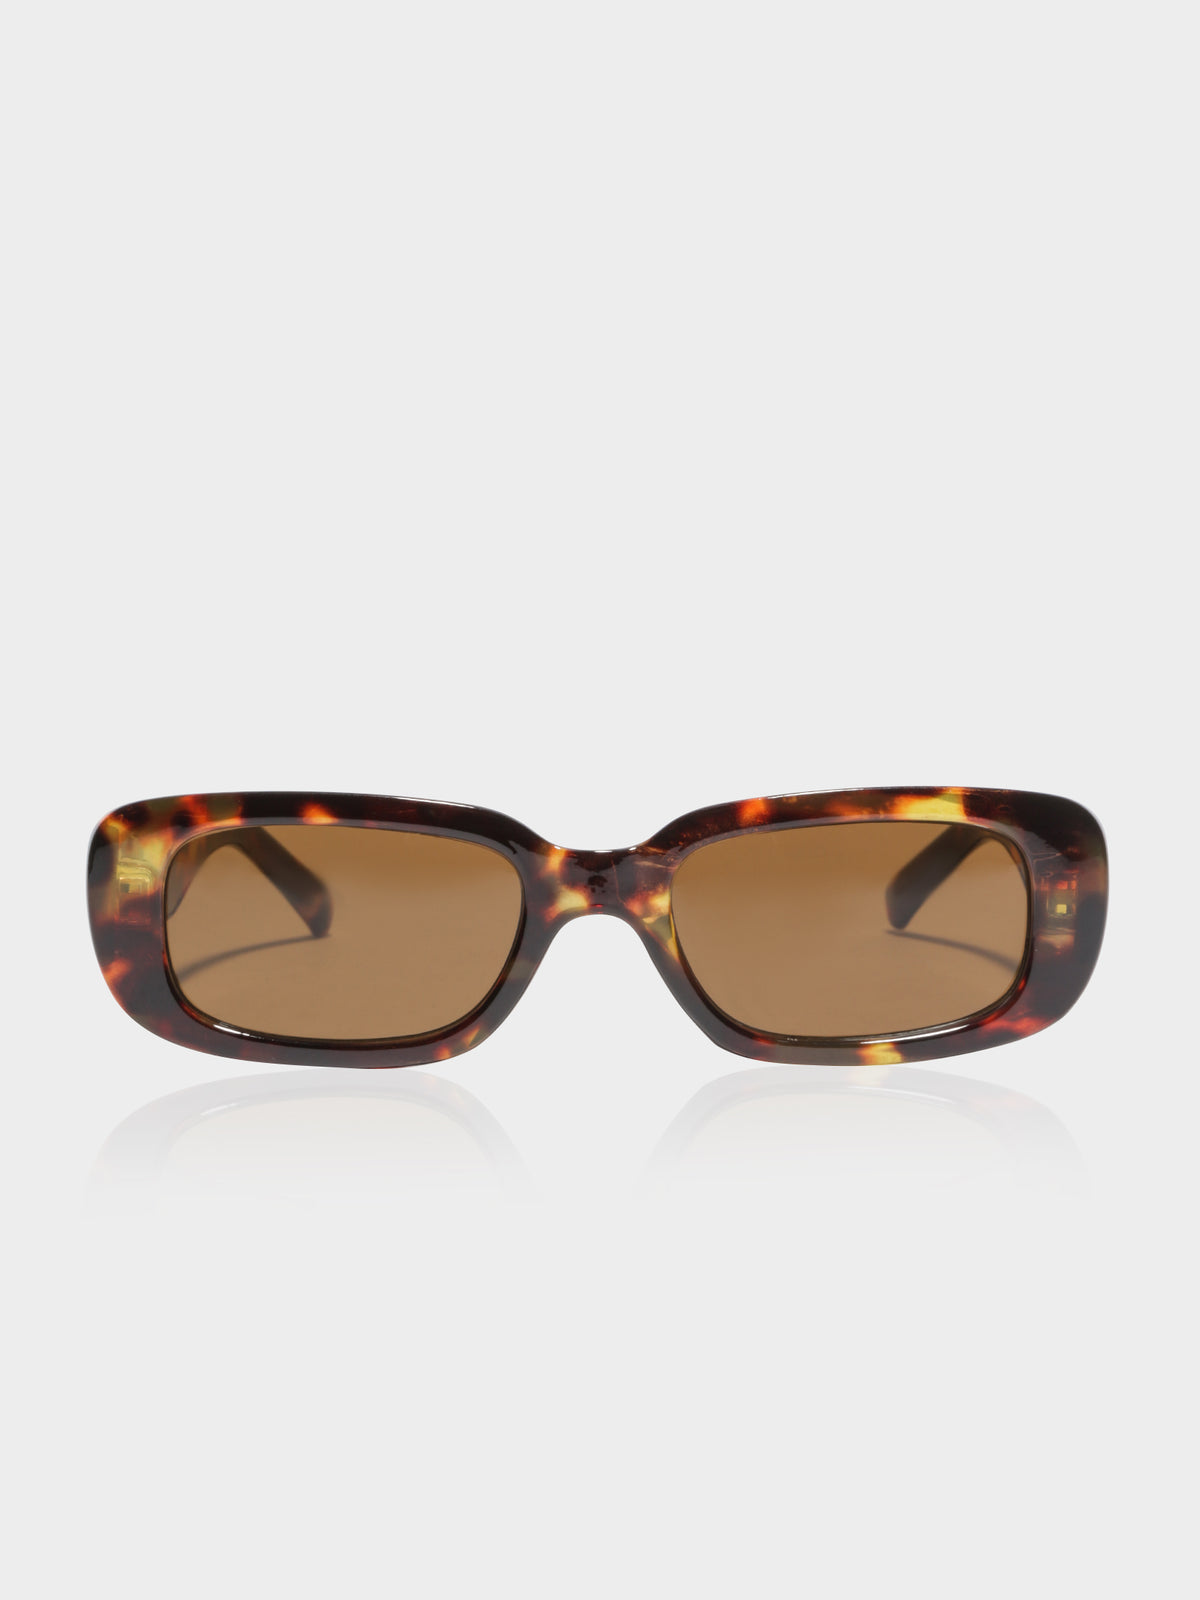 XRAY Spex Rectangle Sunglasses in Turtle